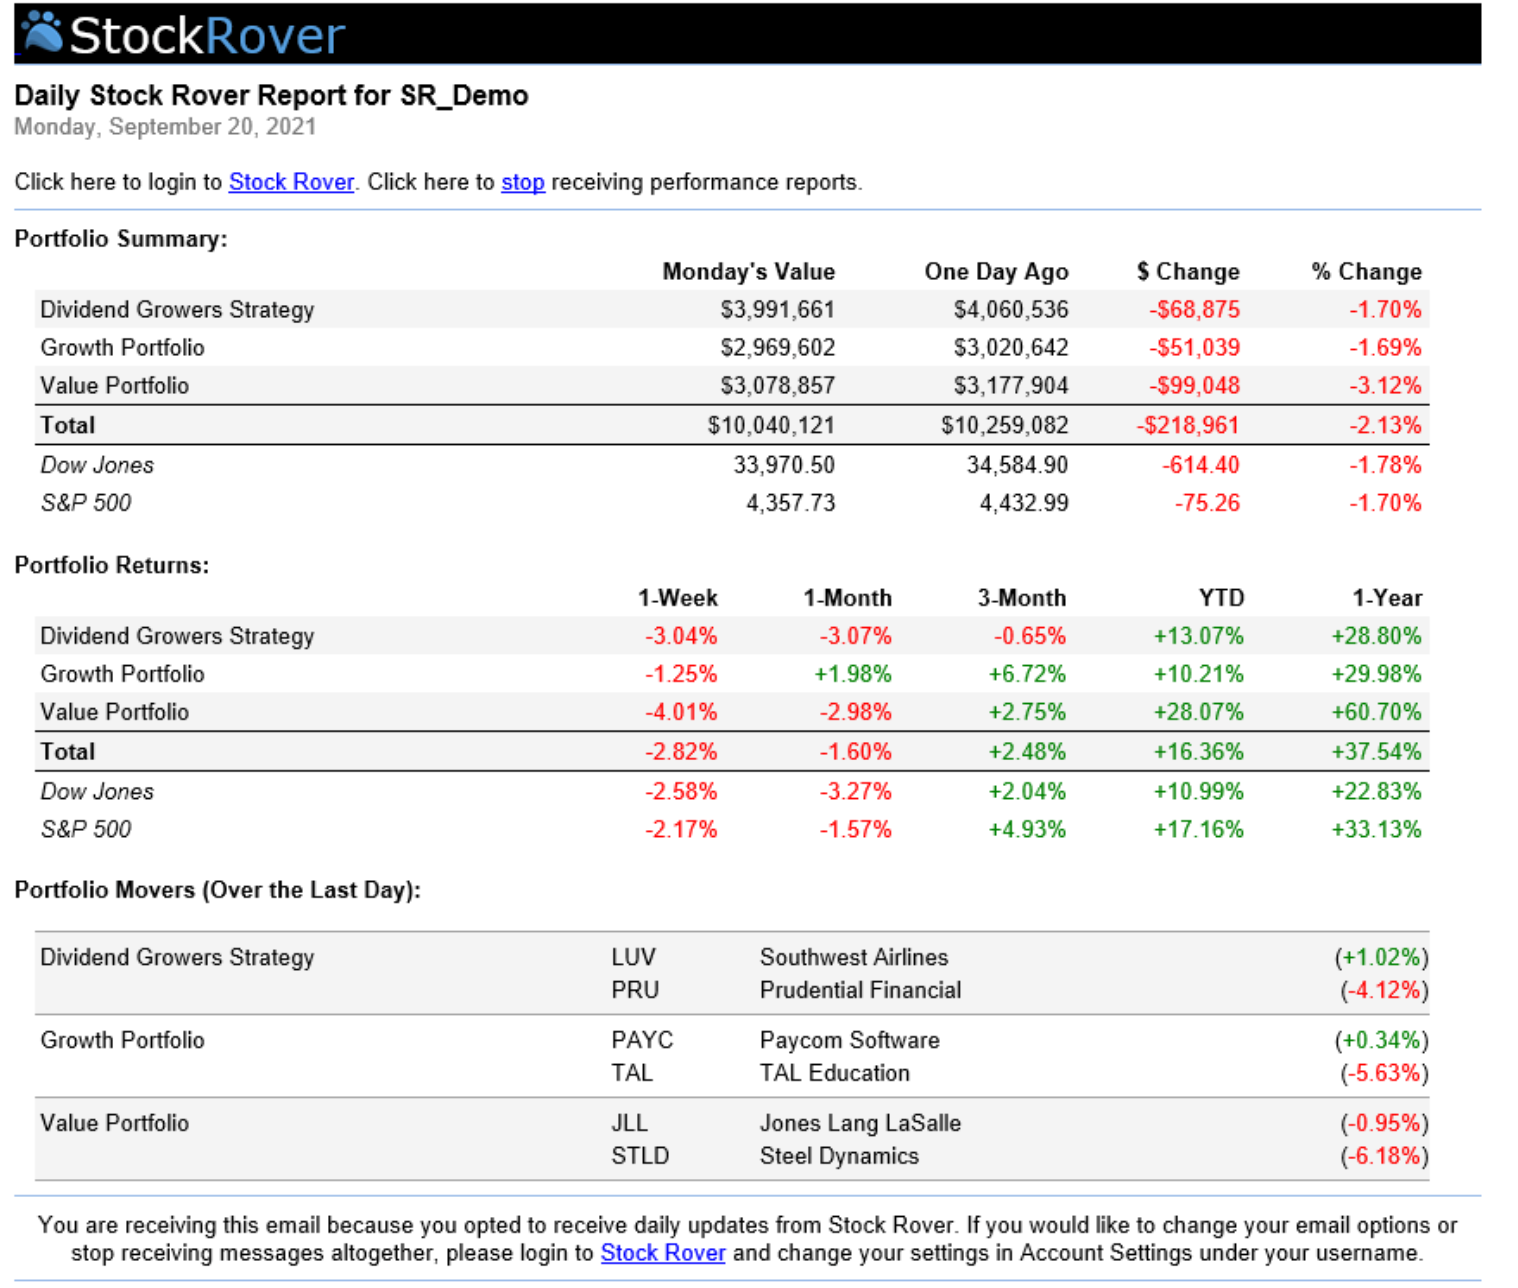 Daily Stock Rover Report, Image Source: Stock Rover Portfolio